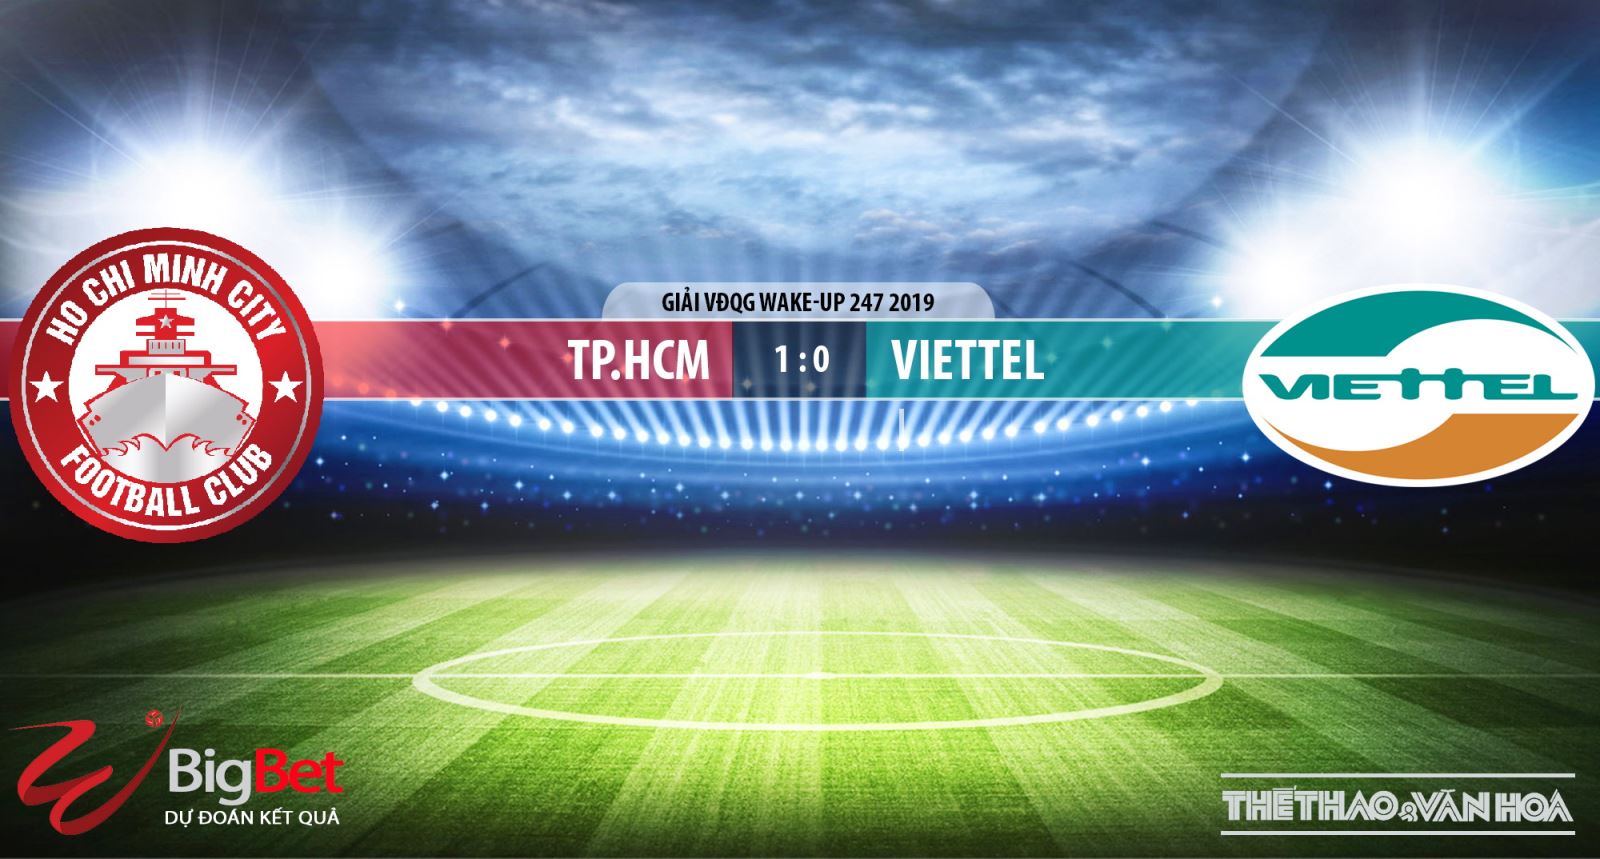 FPT Play, TPHCM vs Viettel, truc tiep bong da, trực tiếp bóng đá, TPHCM, Viettel, VLeague 2019, xem bong da truc tuyen, FPT, trực tiếp TPHCM vs Viettel